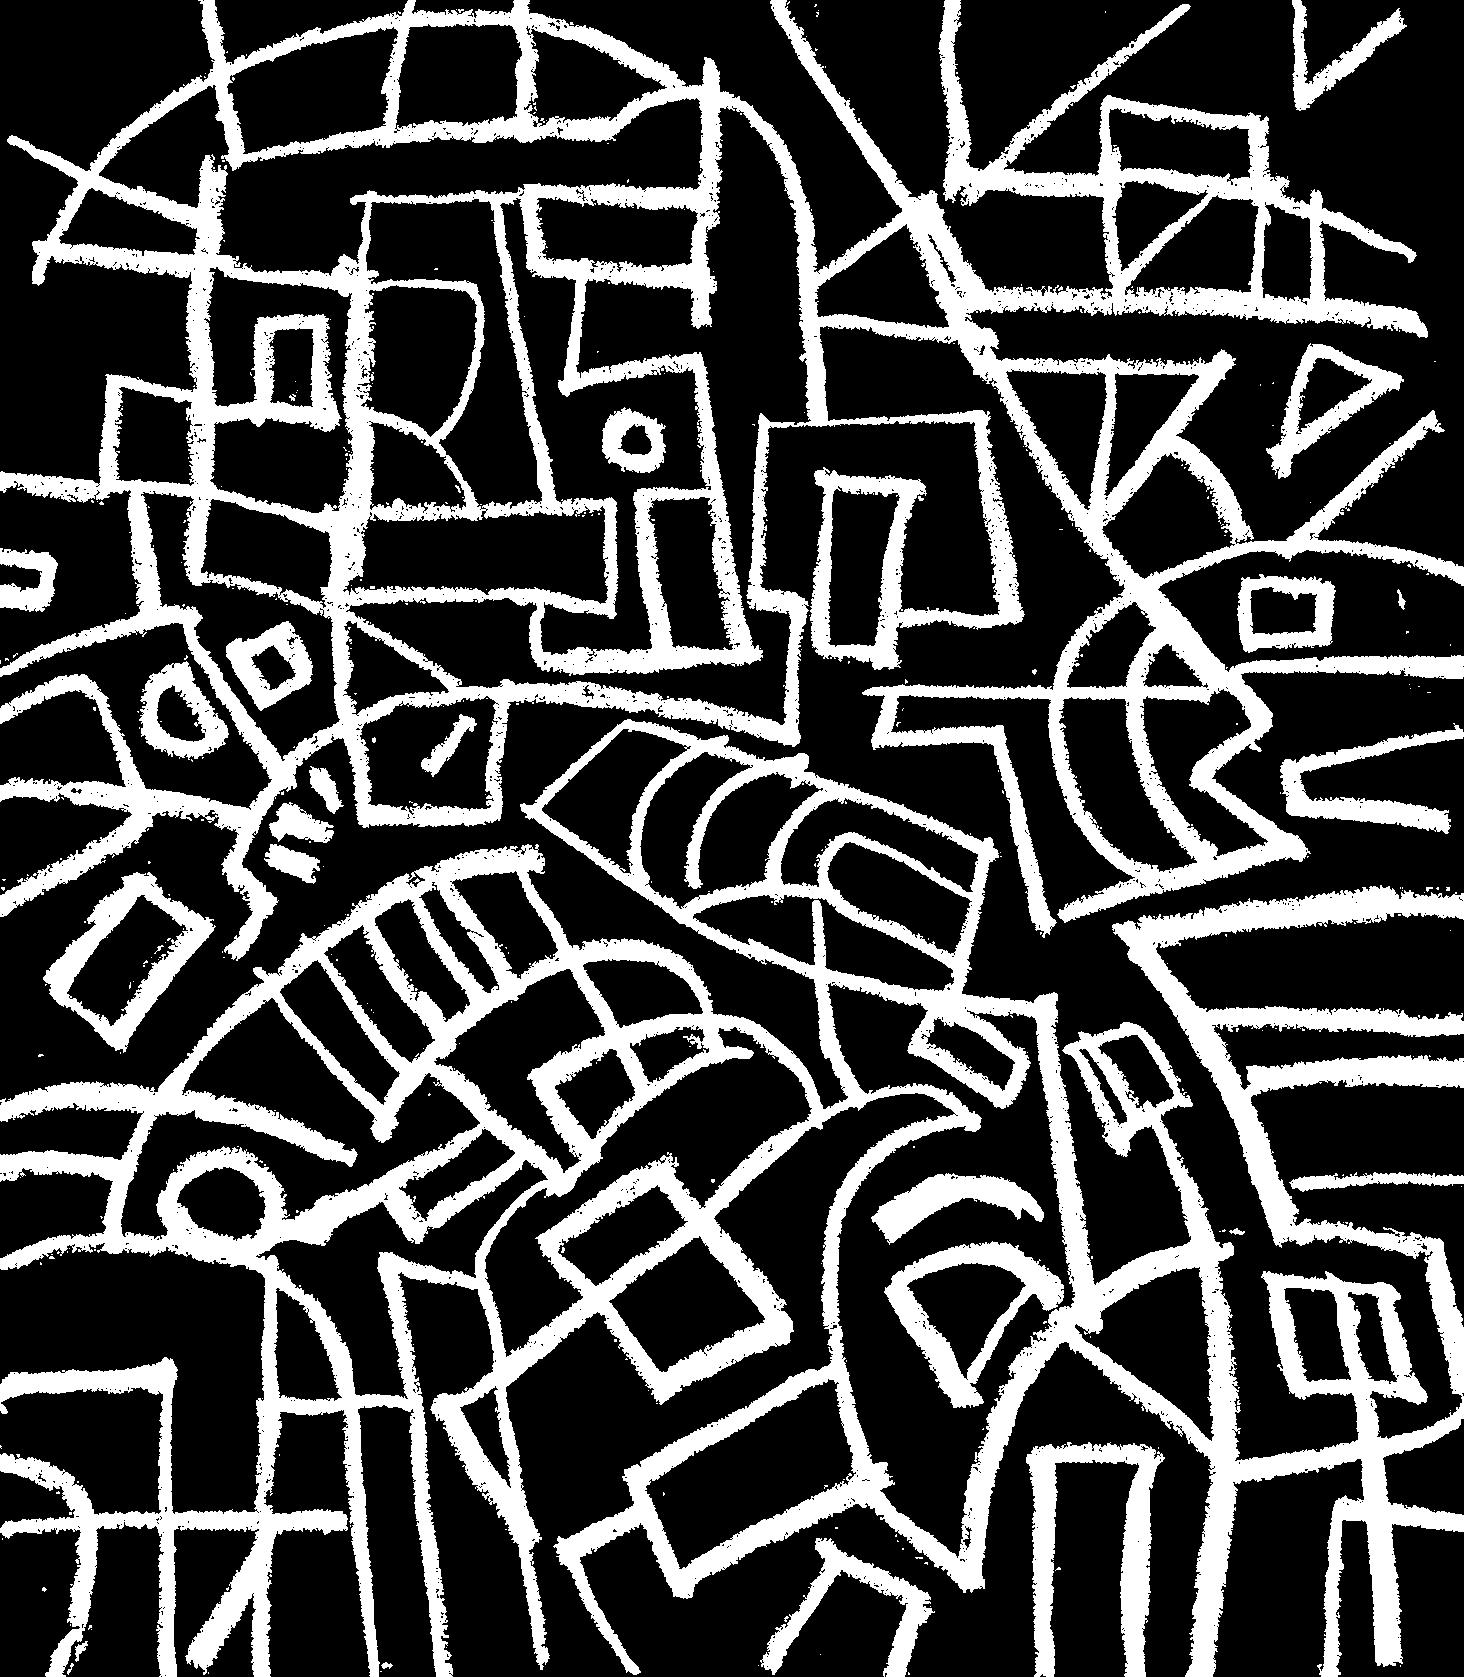 Robert Petrick Abstract Painting – Mass Hysteria, Chalkboard-Serie, Abstraktes Gemälde mit geometrischen Linien